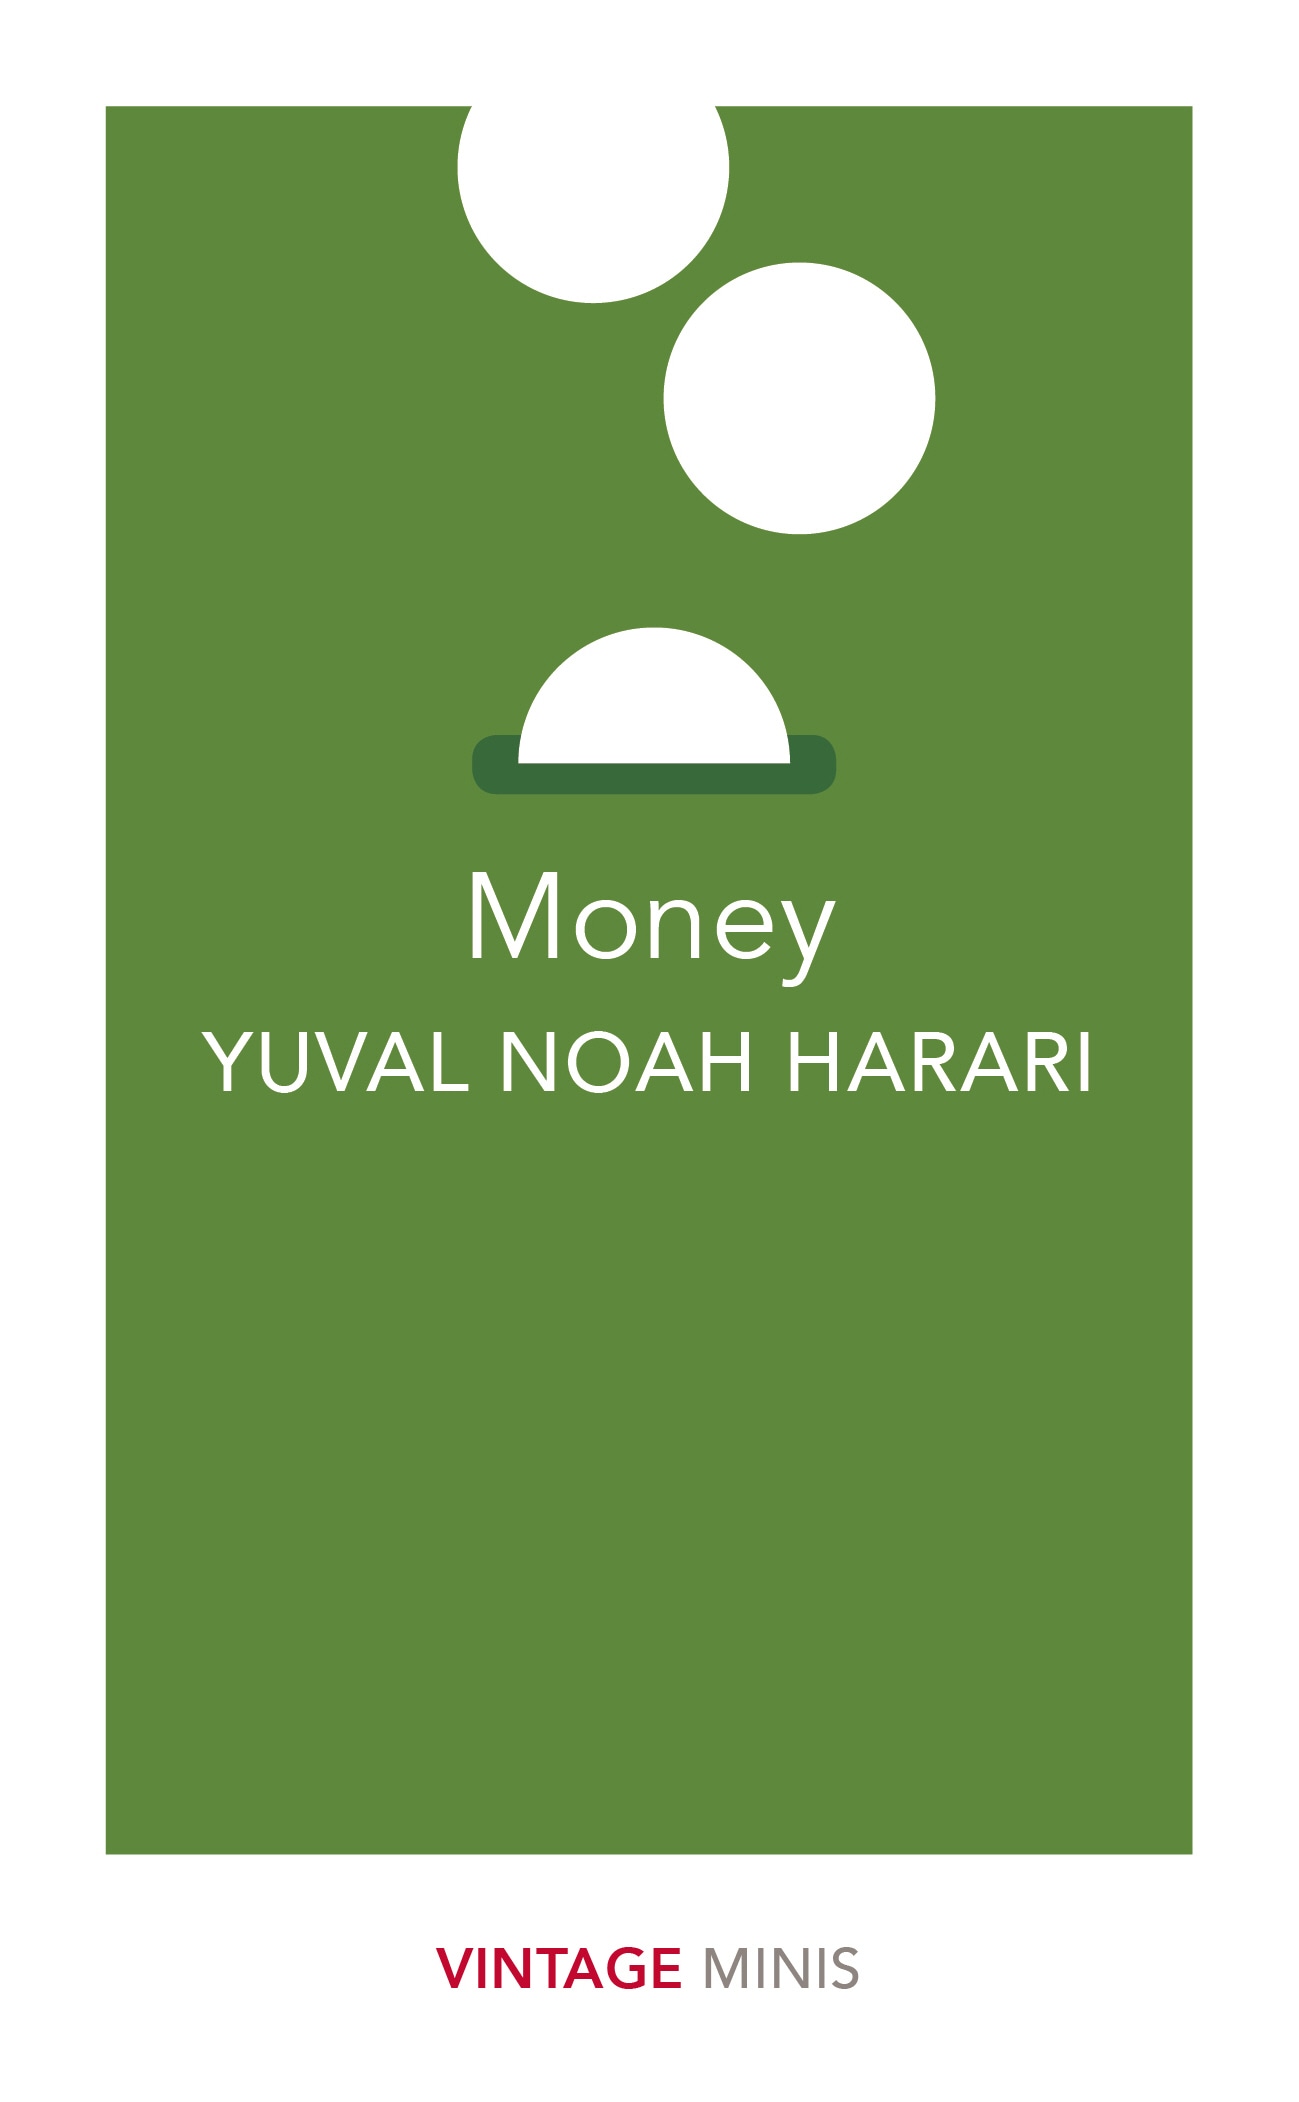 Book “Money” by Yuval Noah Harari — April 5, 2018